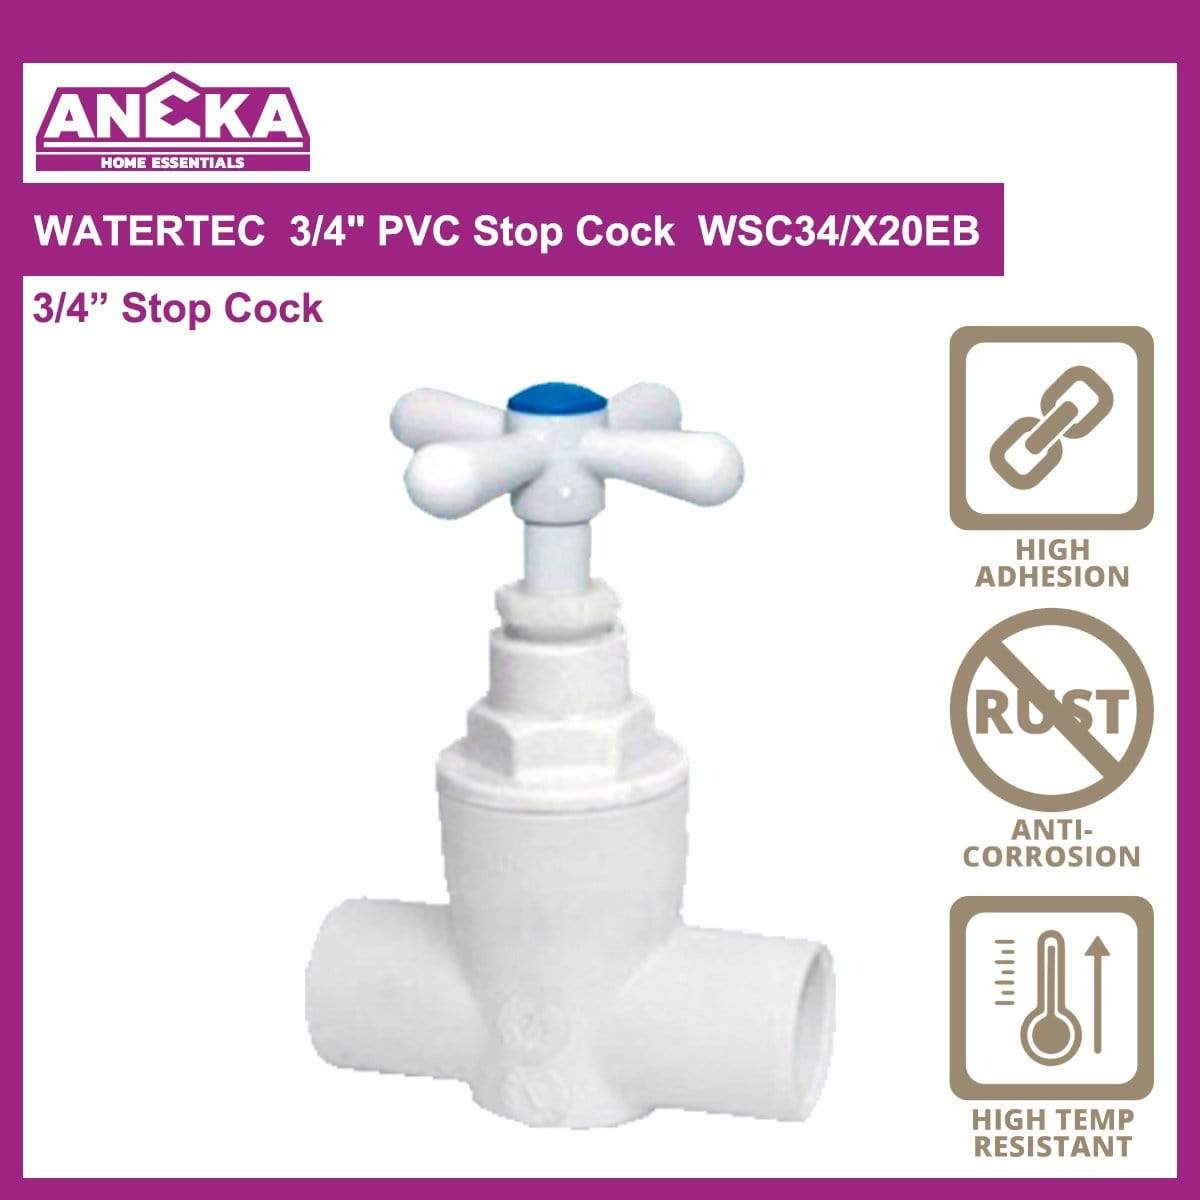 WATERTEC 3/4" PVC Stop Cock WSC34/X20EB